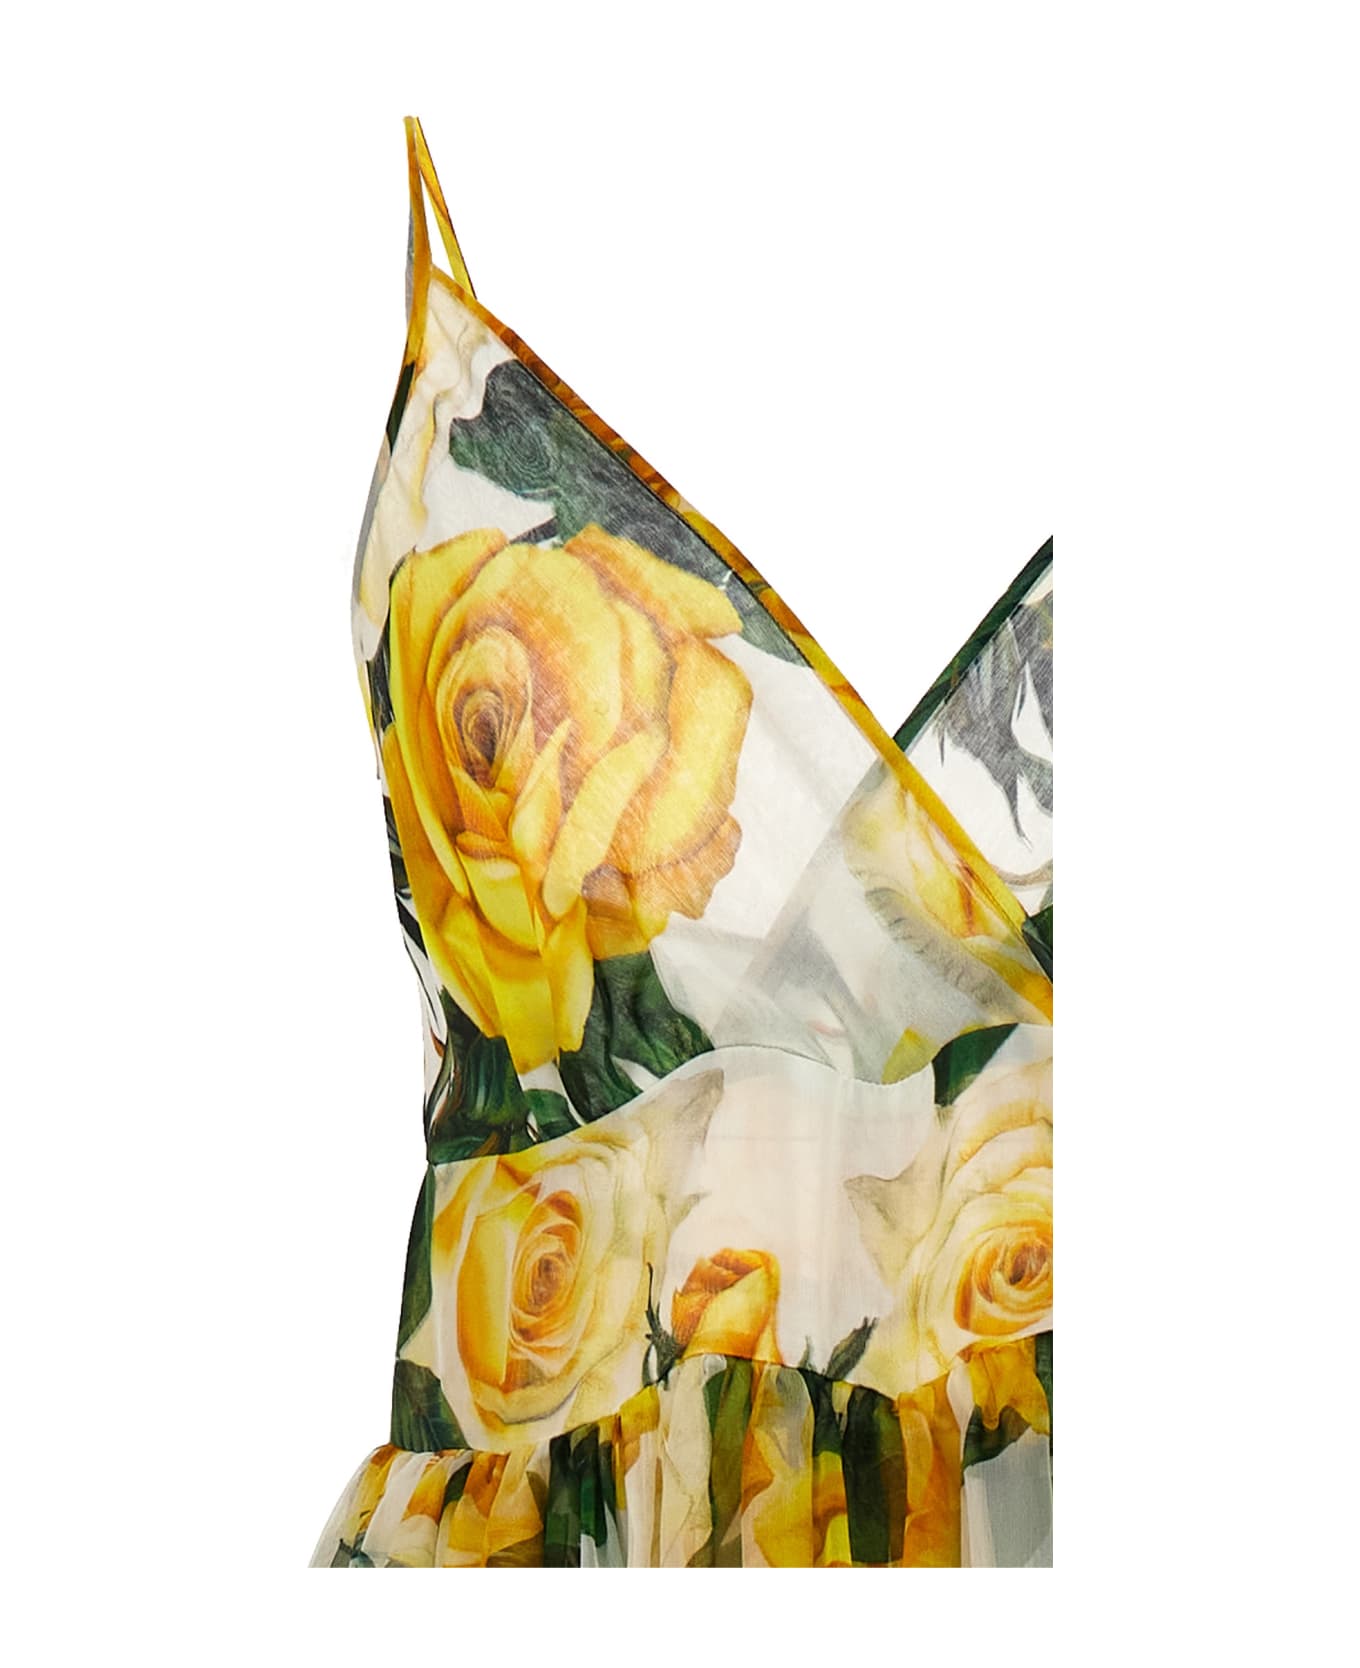 Dolce & Gabbana 'rose Gialle' Dress - Yellow